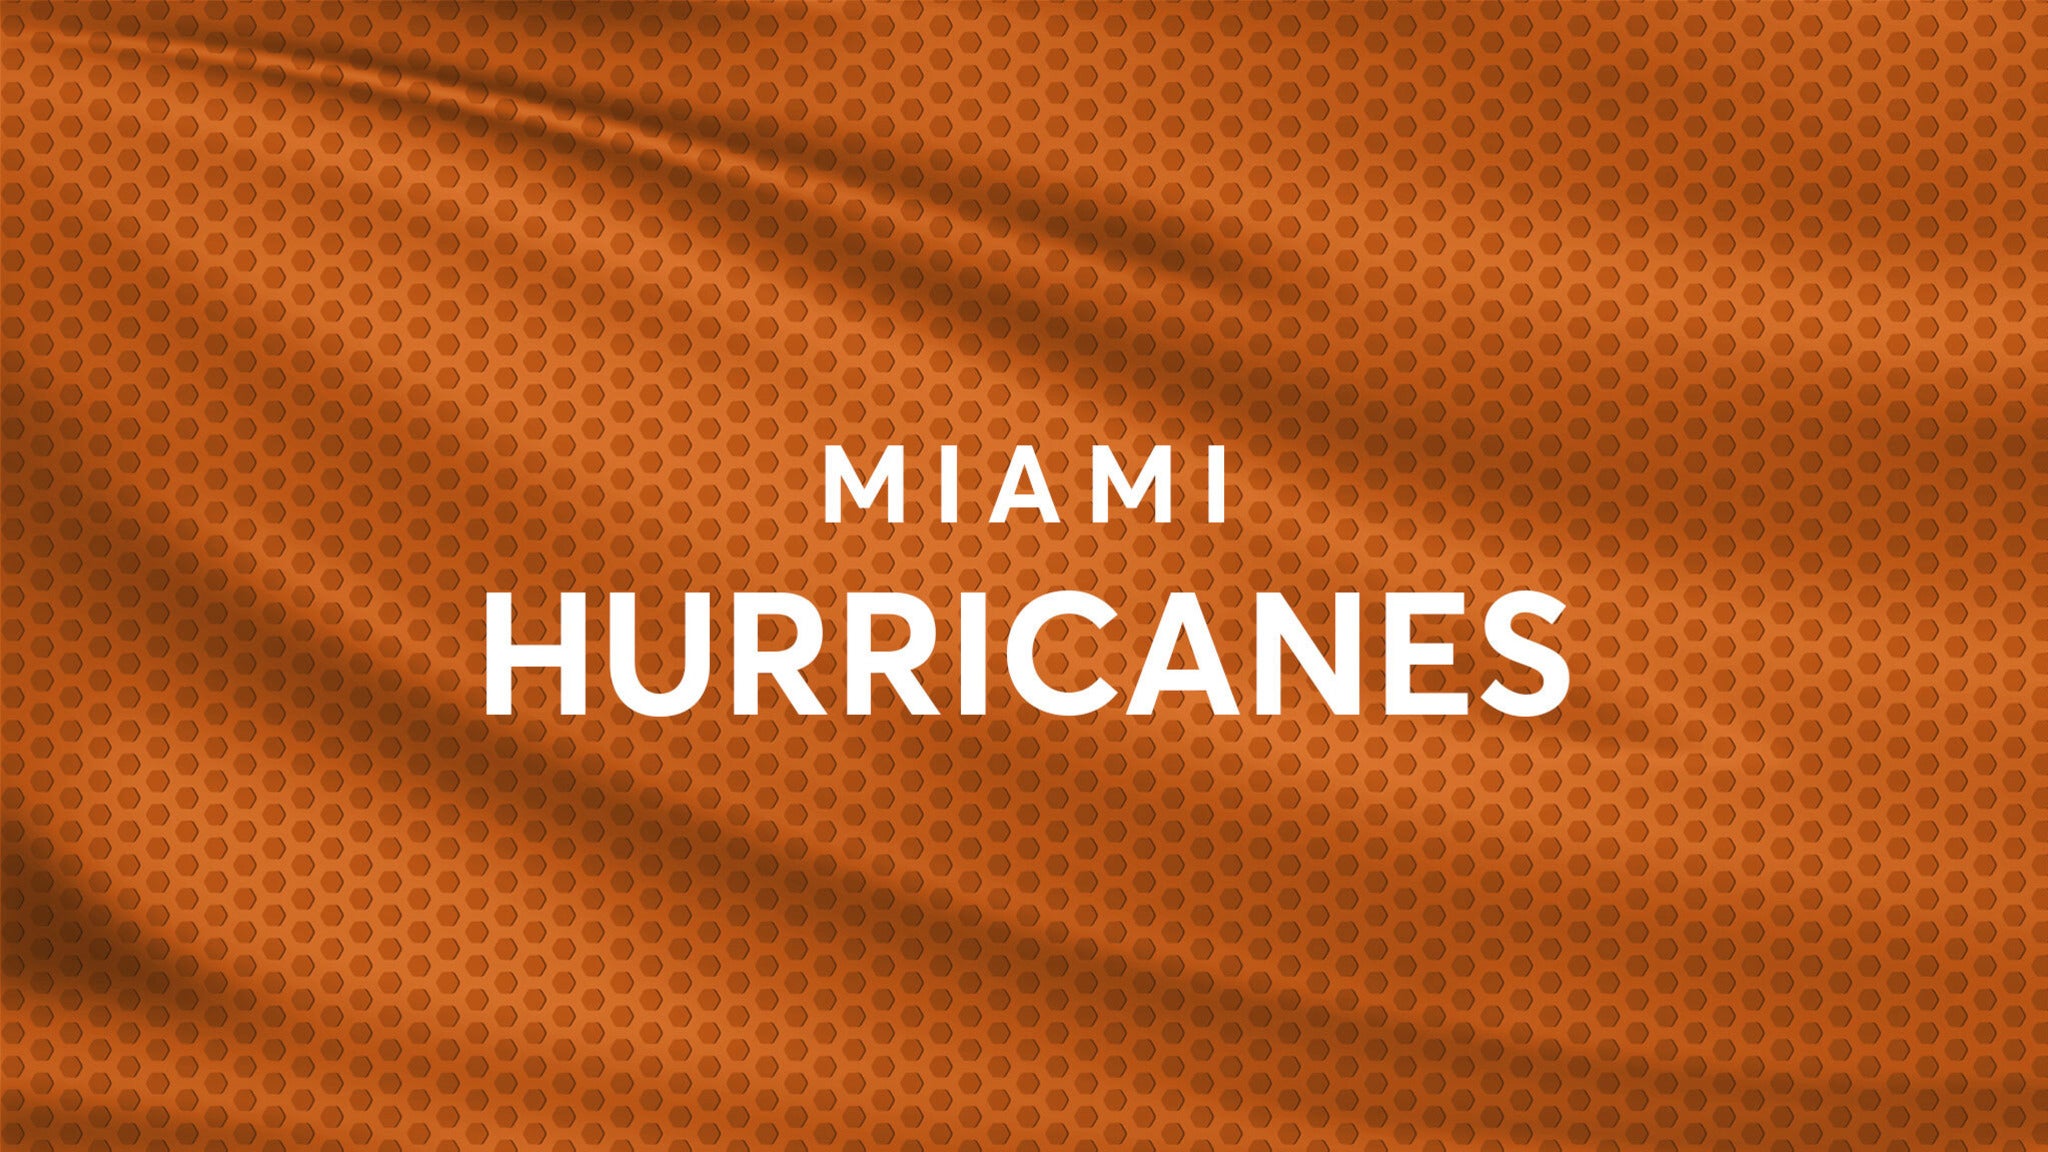 Miami Hurricanes Football vs. Duke Blue Devils Football